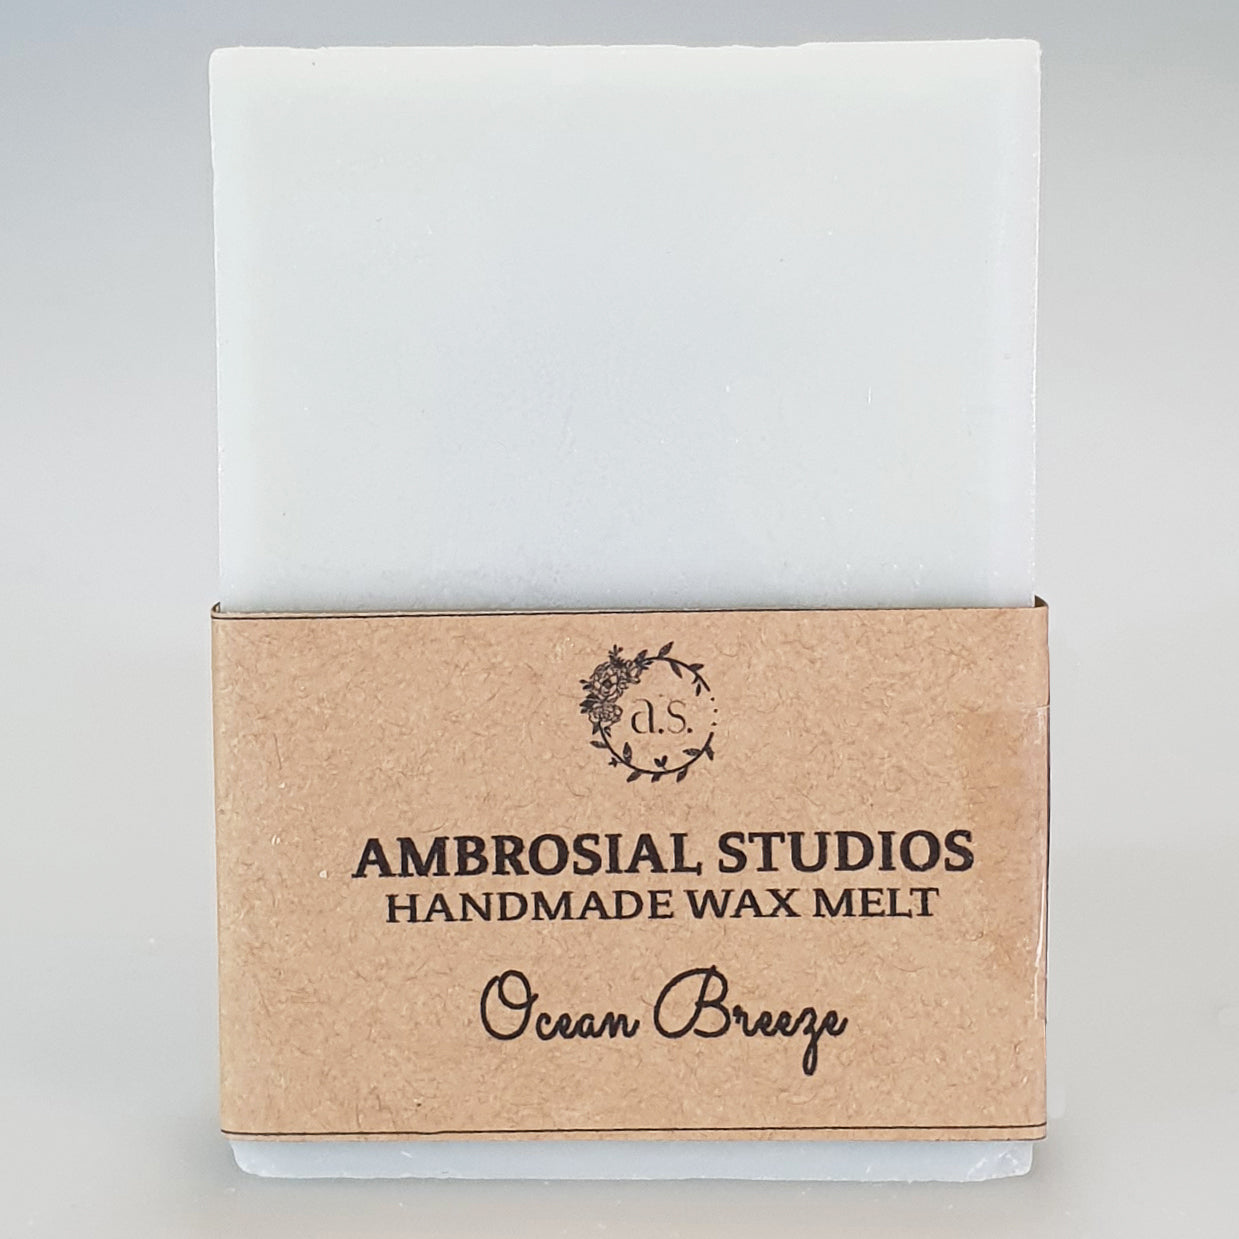 Ambrosial Studios - Handmade Wax Melt - Ocean Breeze